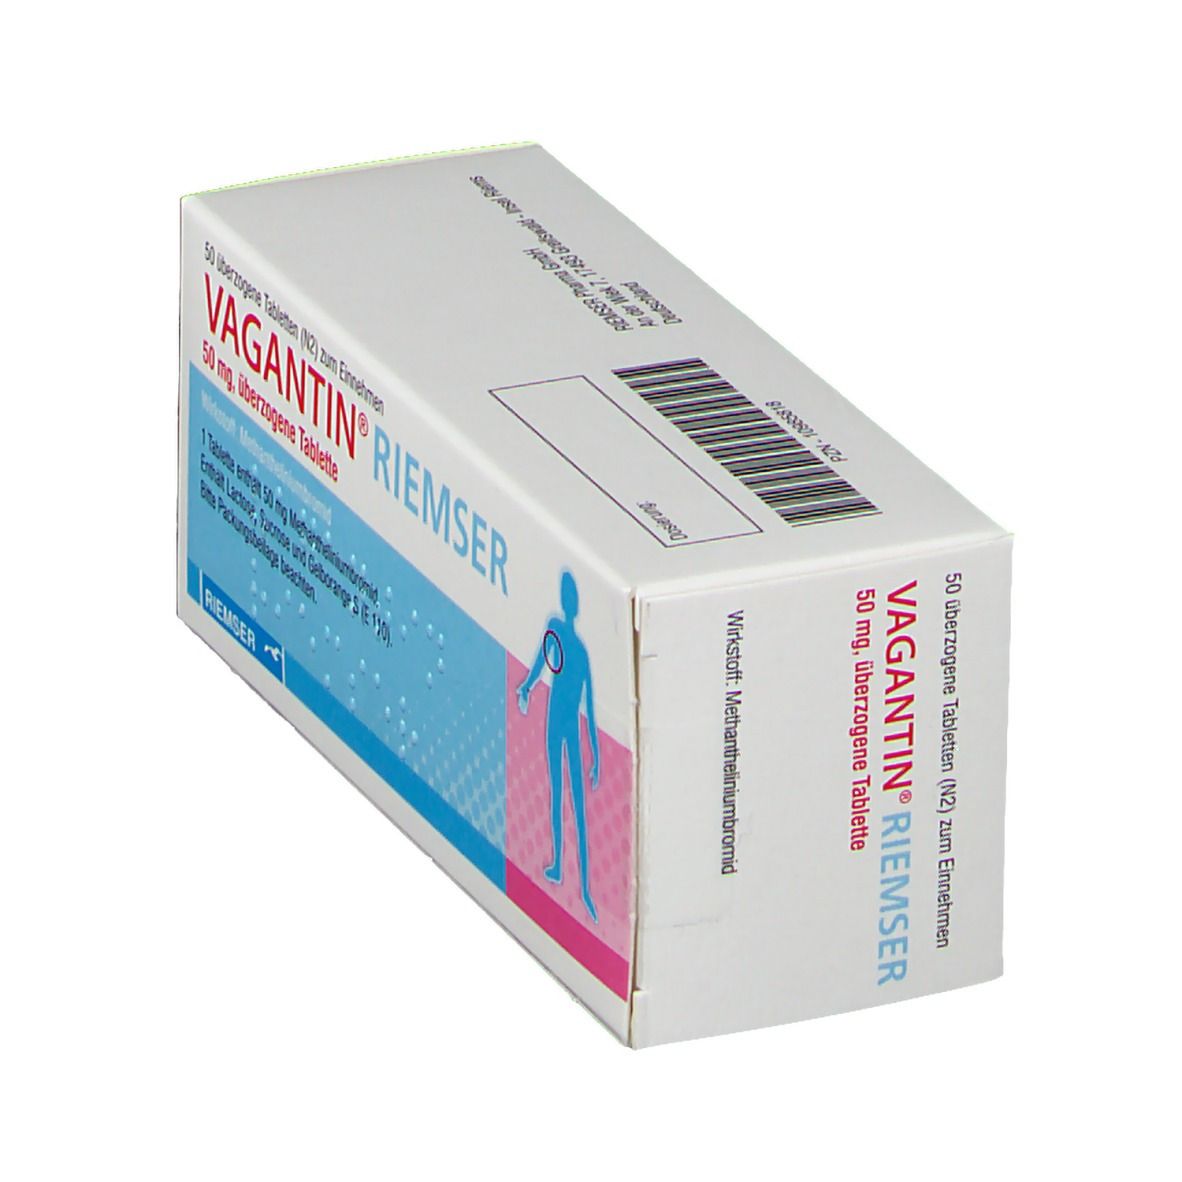 VAGANTIN® RIEMSER 50 mg